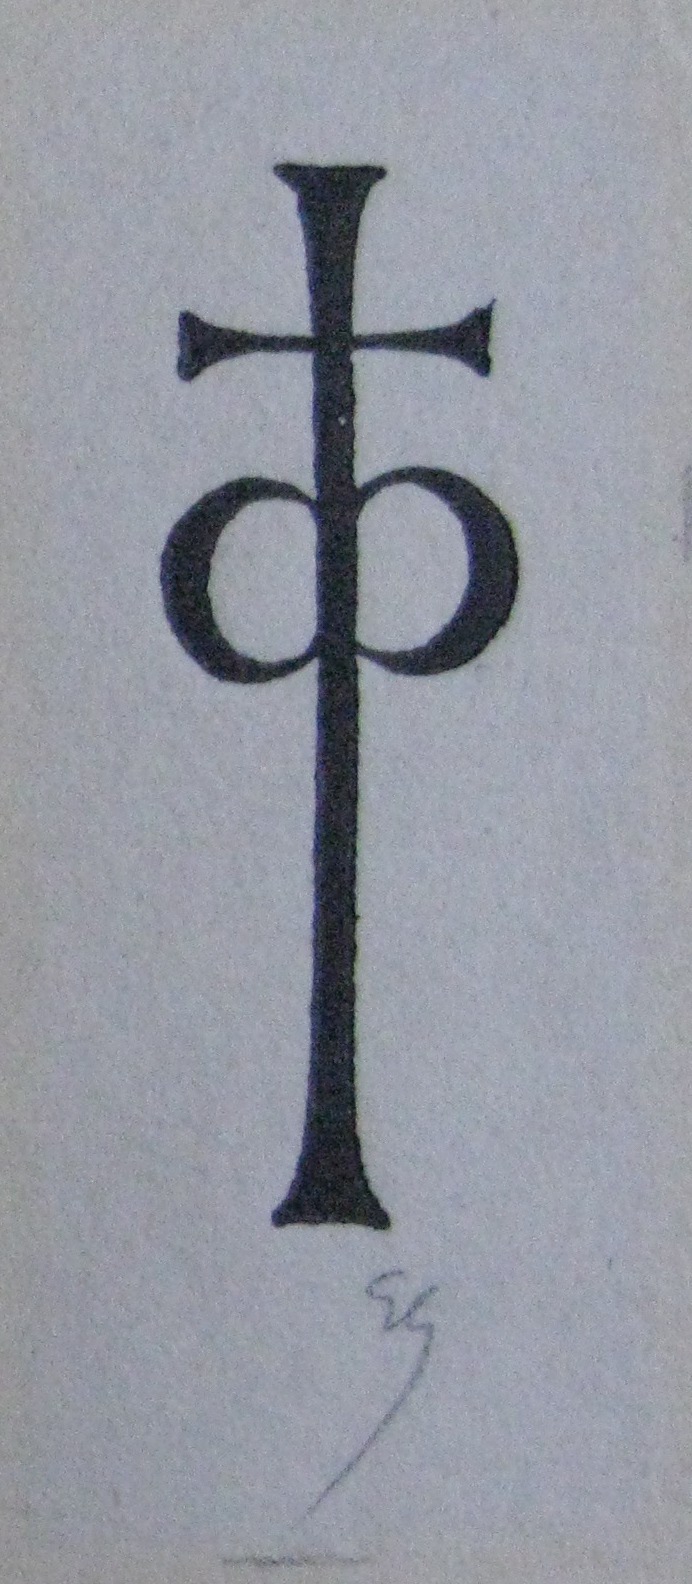 Imprint: D. P. and Cross